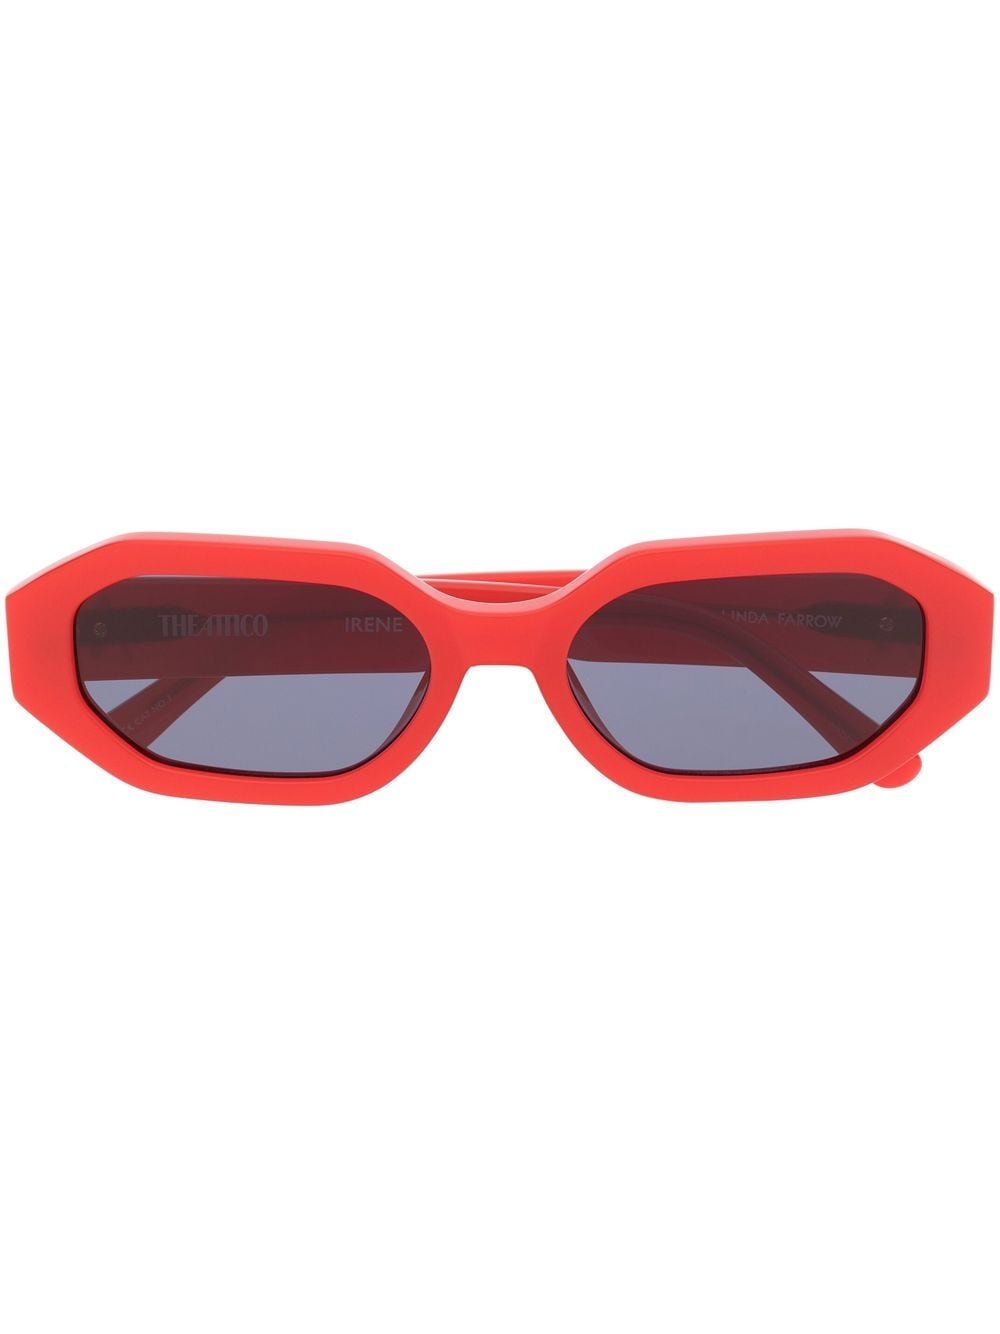 Image 1 of Linda Farrow x The Attico Irene sunglasses